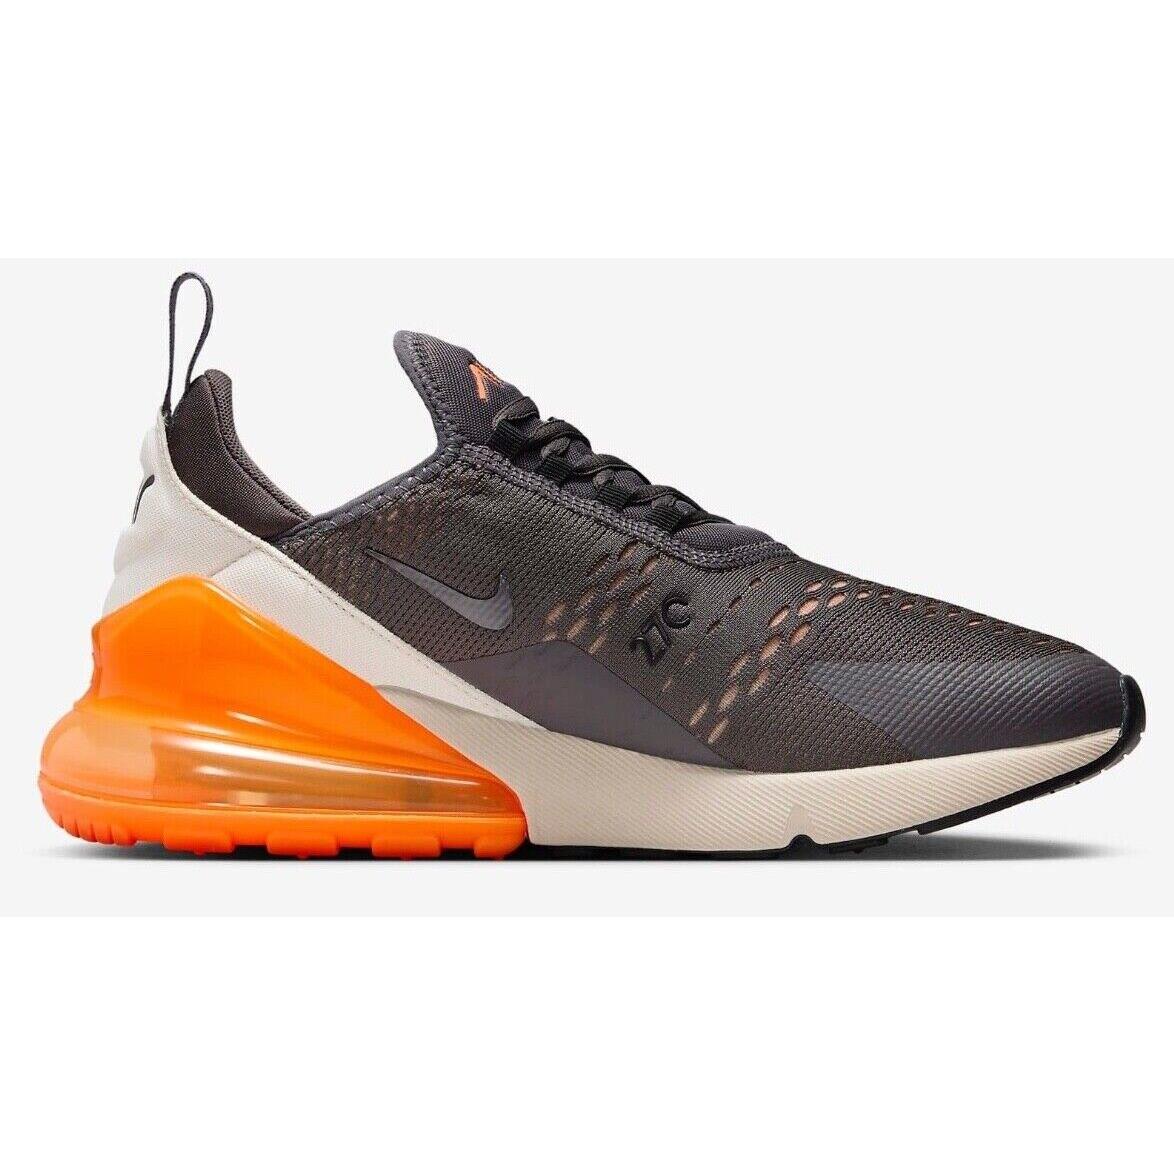 Nike Air Max 270 Men`s Casual Shoes All Colors US Sizes 7-14 Thunder Grey/Desert Sand/Total Orange/Black